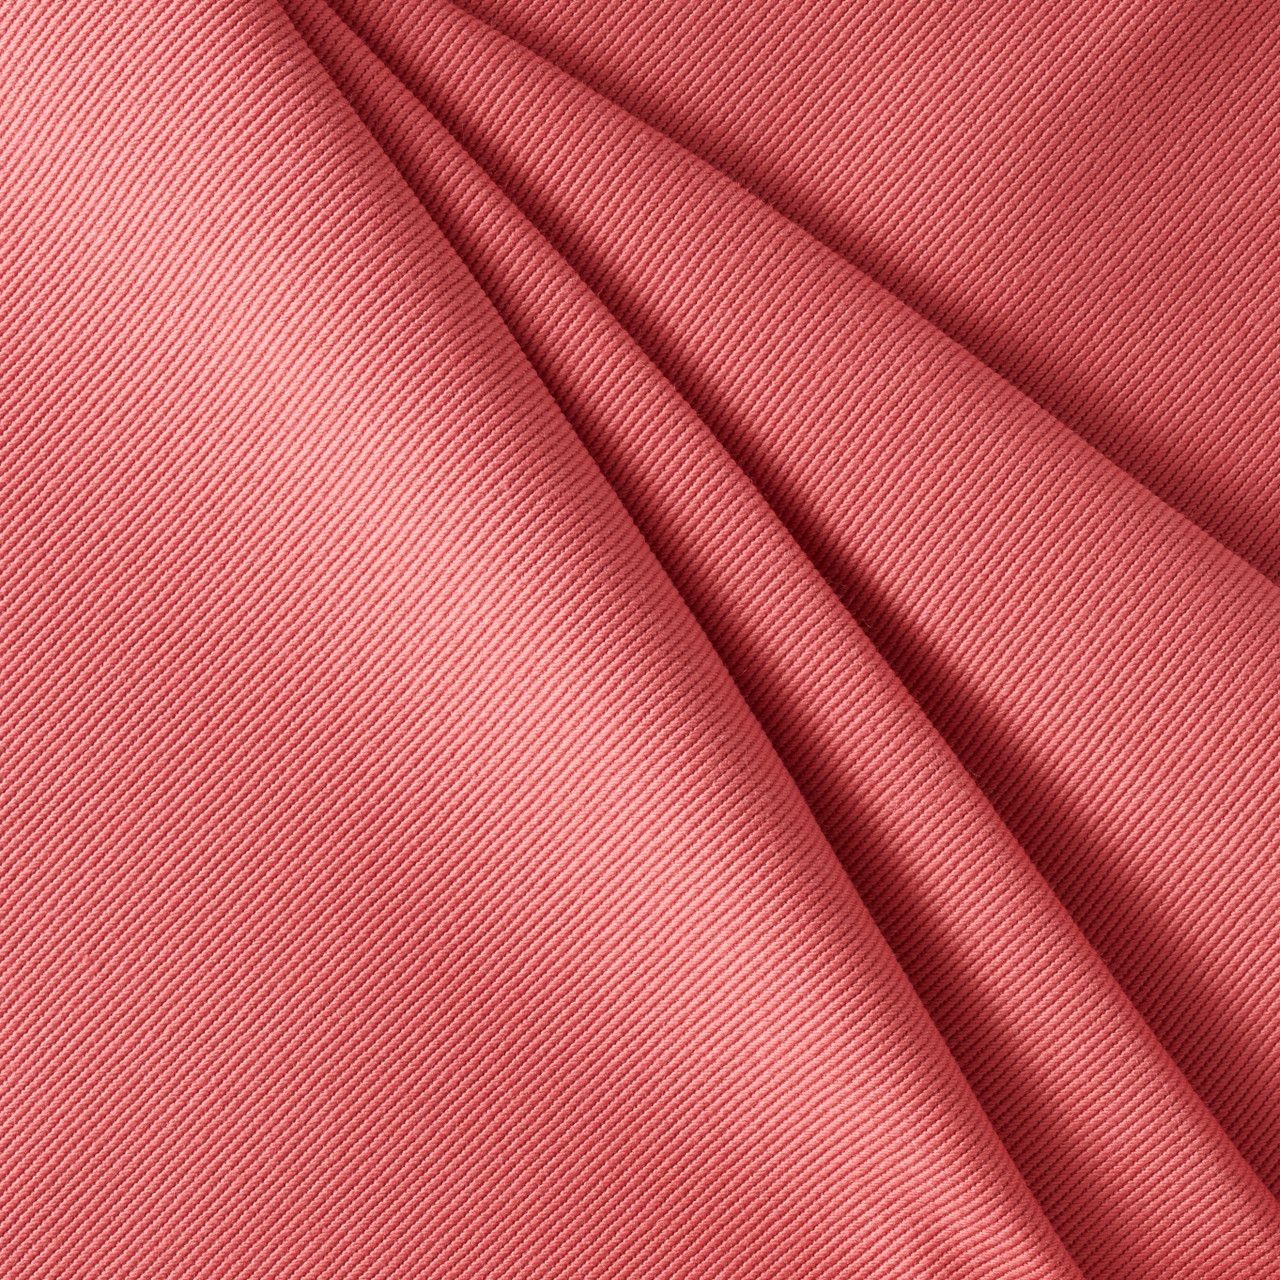 Premium Photo | Red pink denim textile background fabric background surface  texture concept